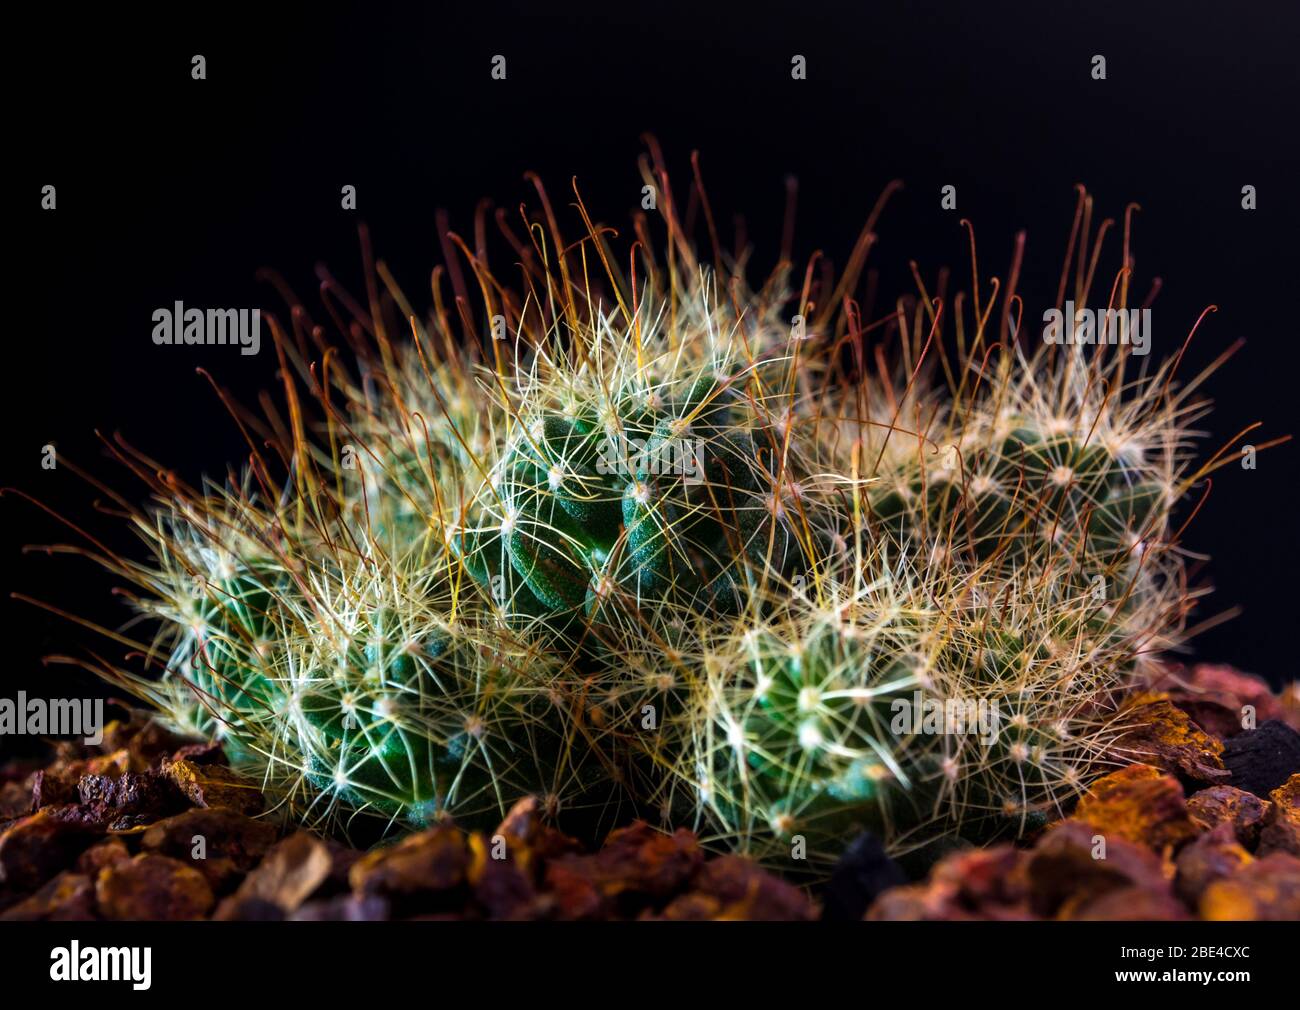 Clump of Thorn hook Mammillaria surculosa cactus species in black background Stock Photo